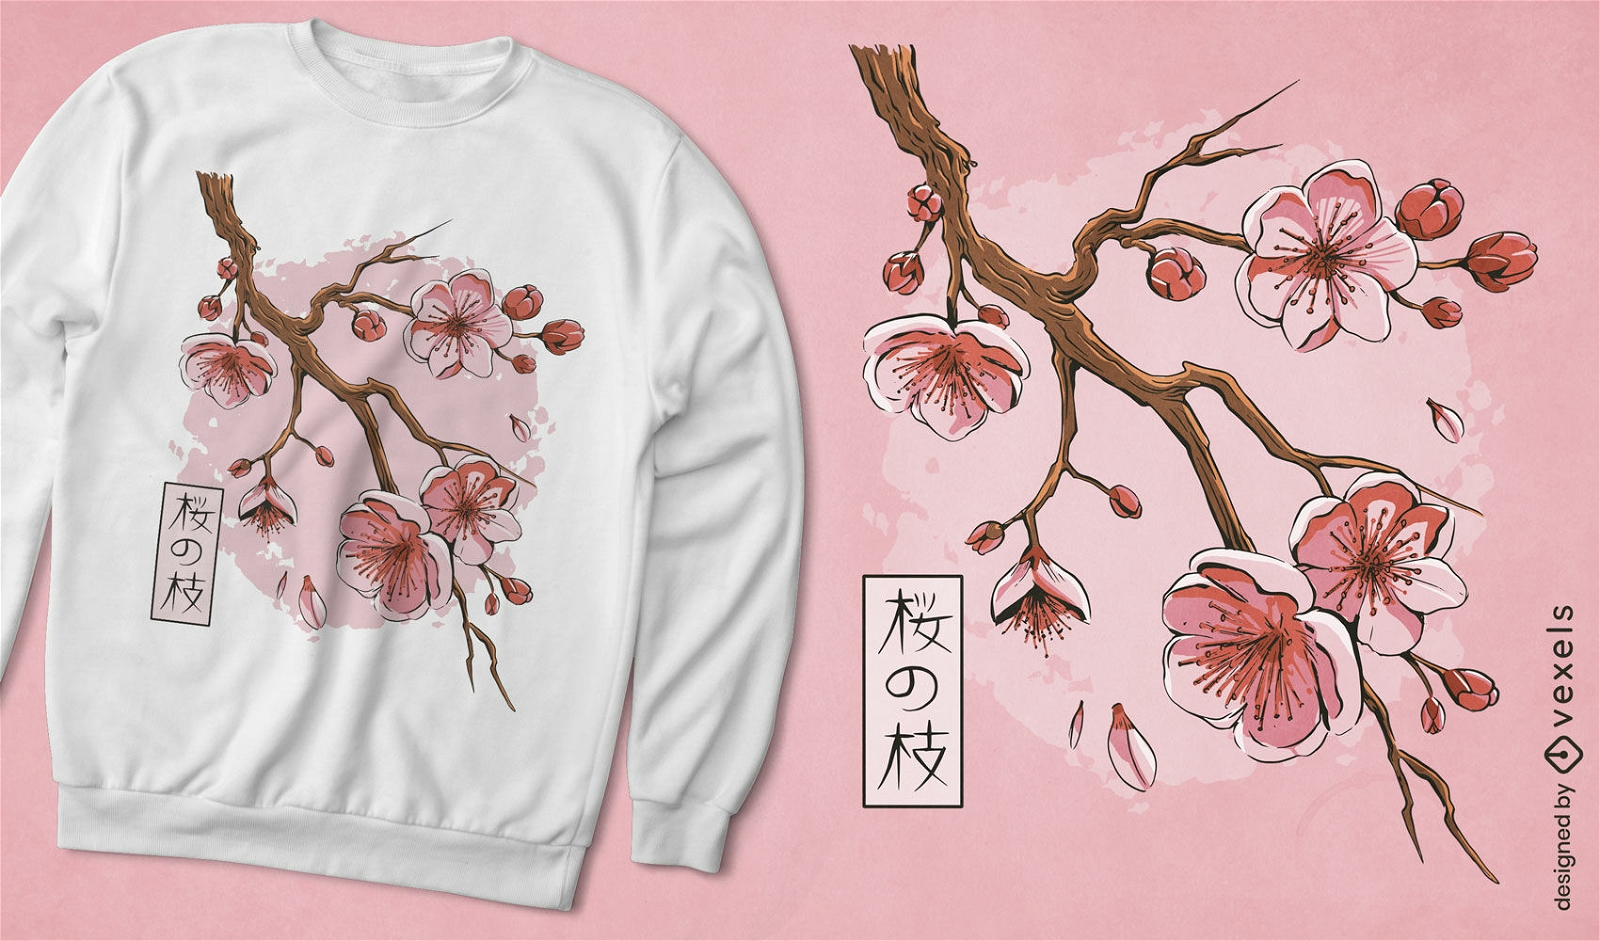 Japanisches T-Shirt-Design des Sakura-Blütenbaums